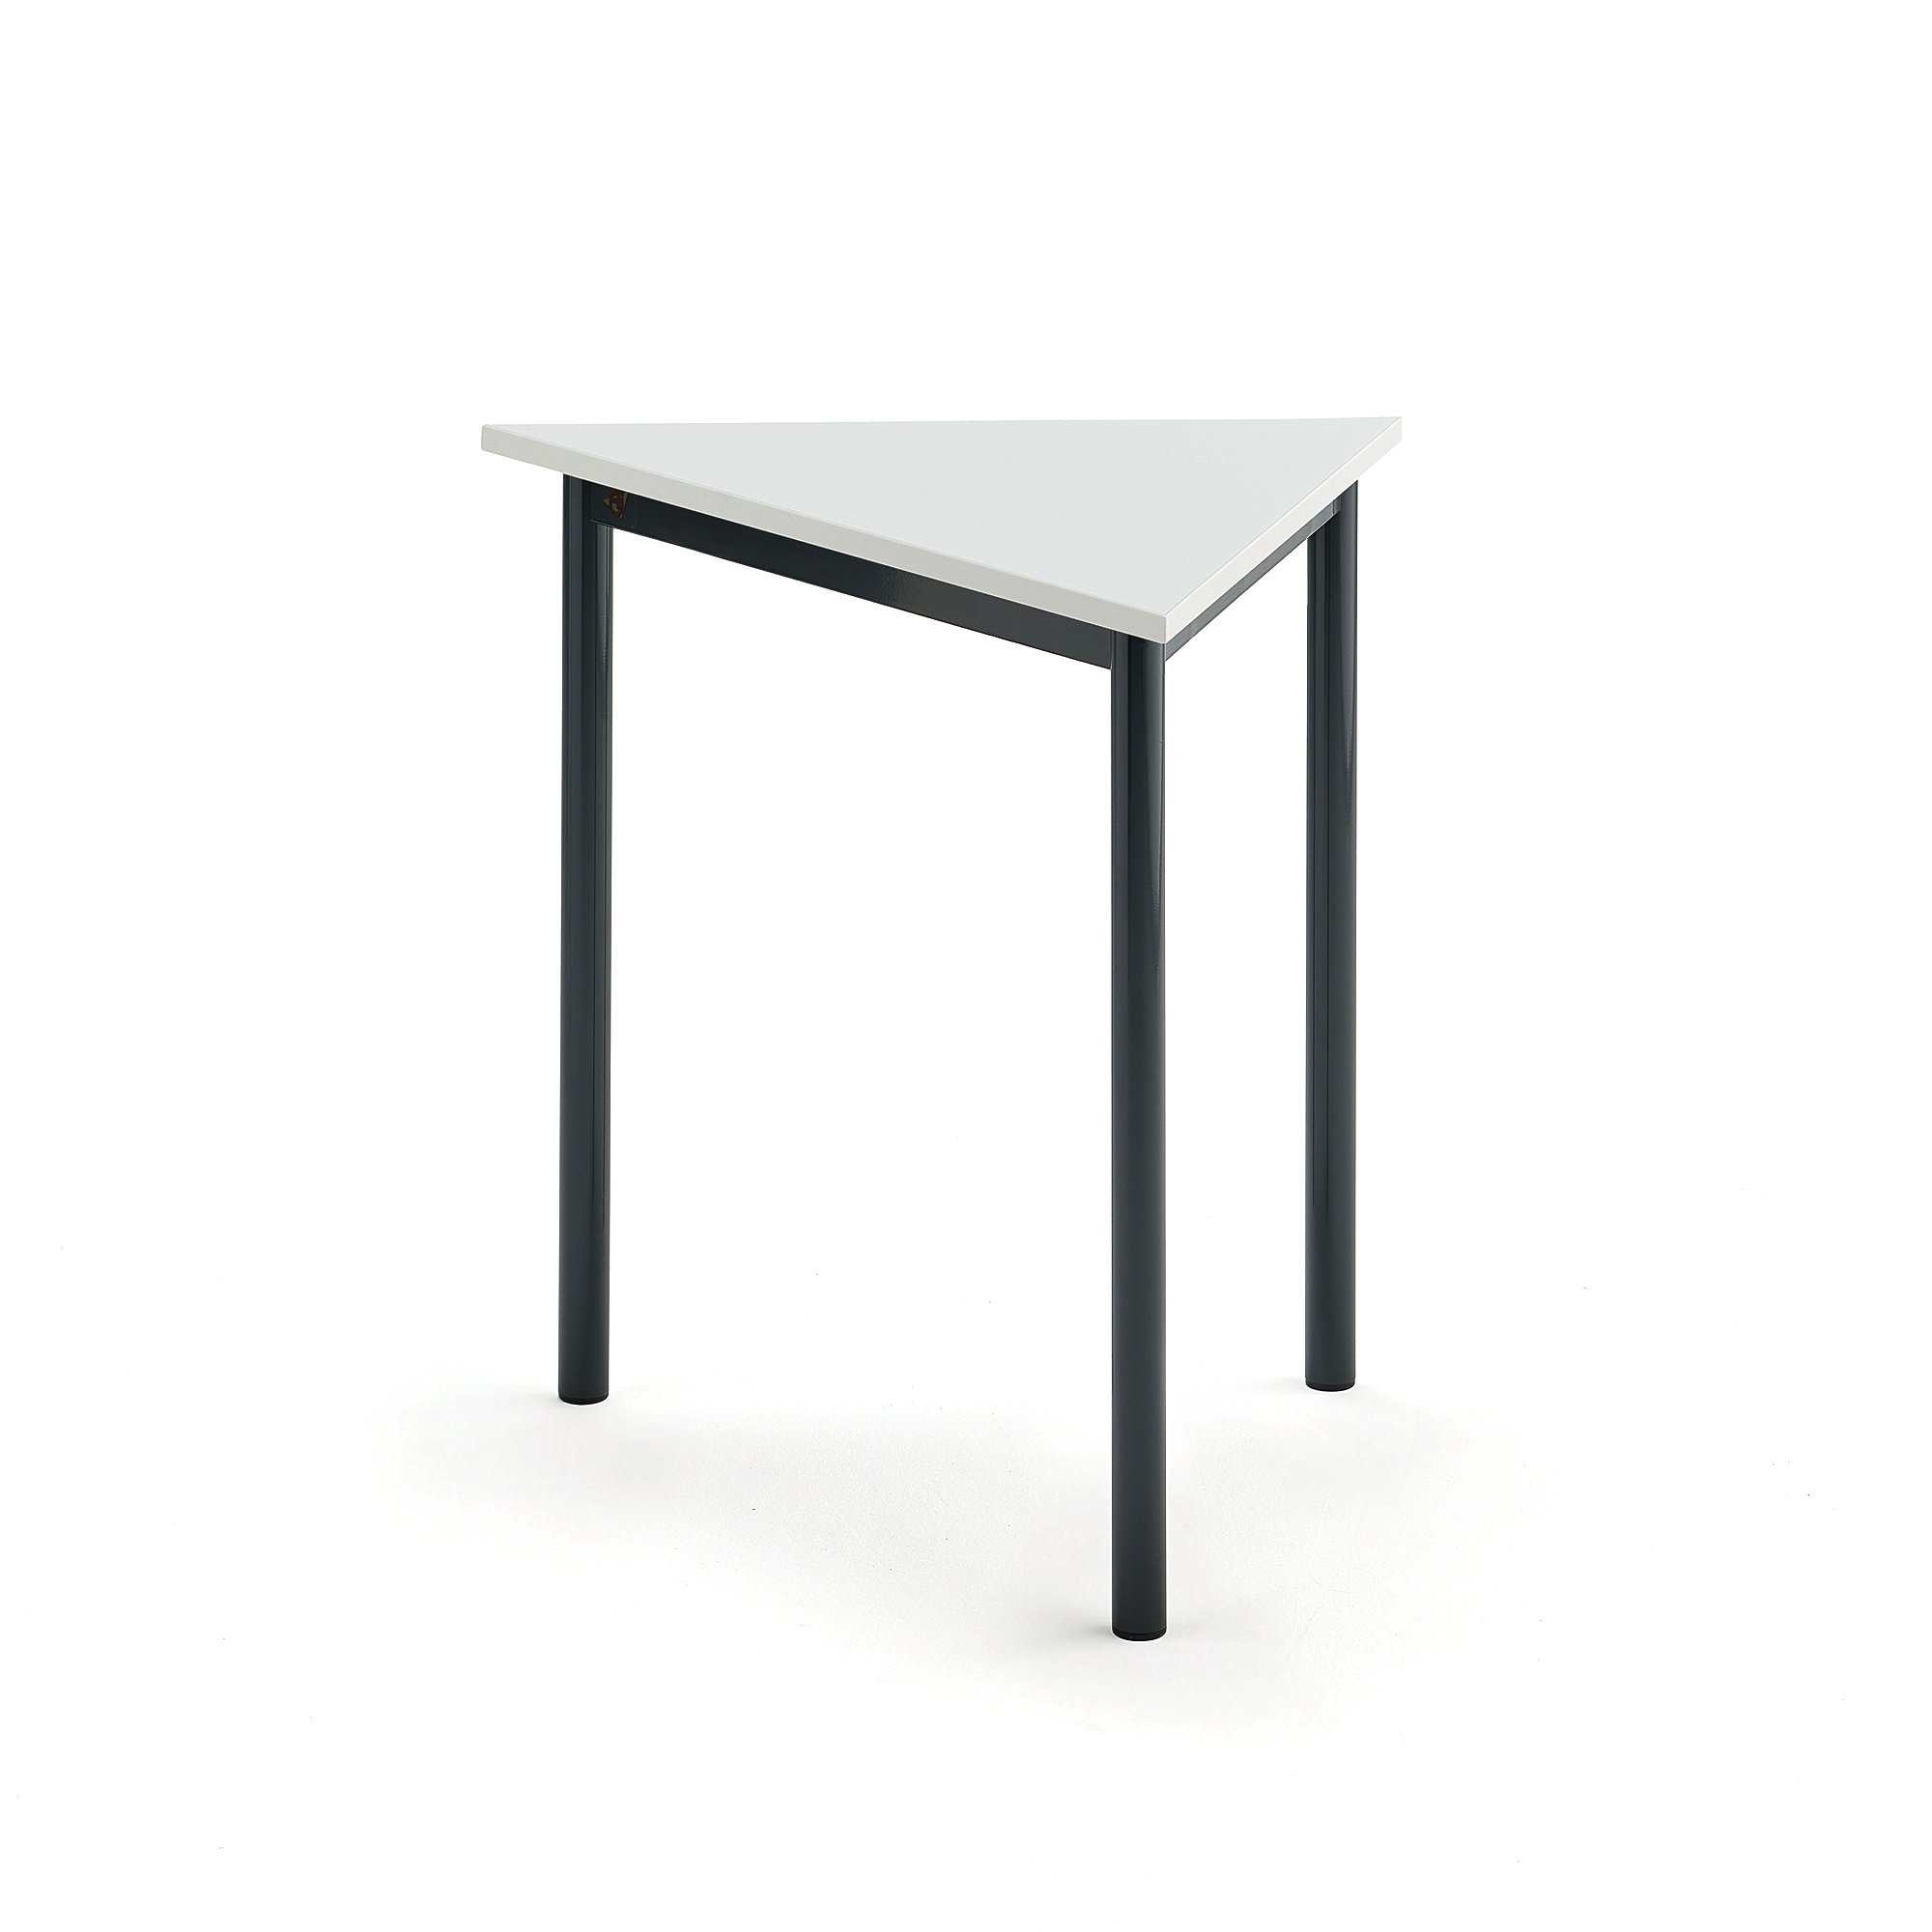 Stůl BORÅS TRIANGEL, 800x700x720 mm, antracitově šedé nohy, HPL deska, bílá